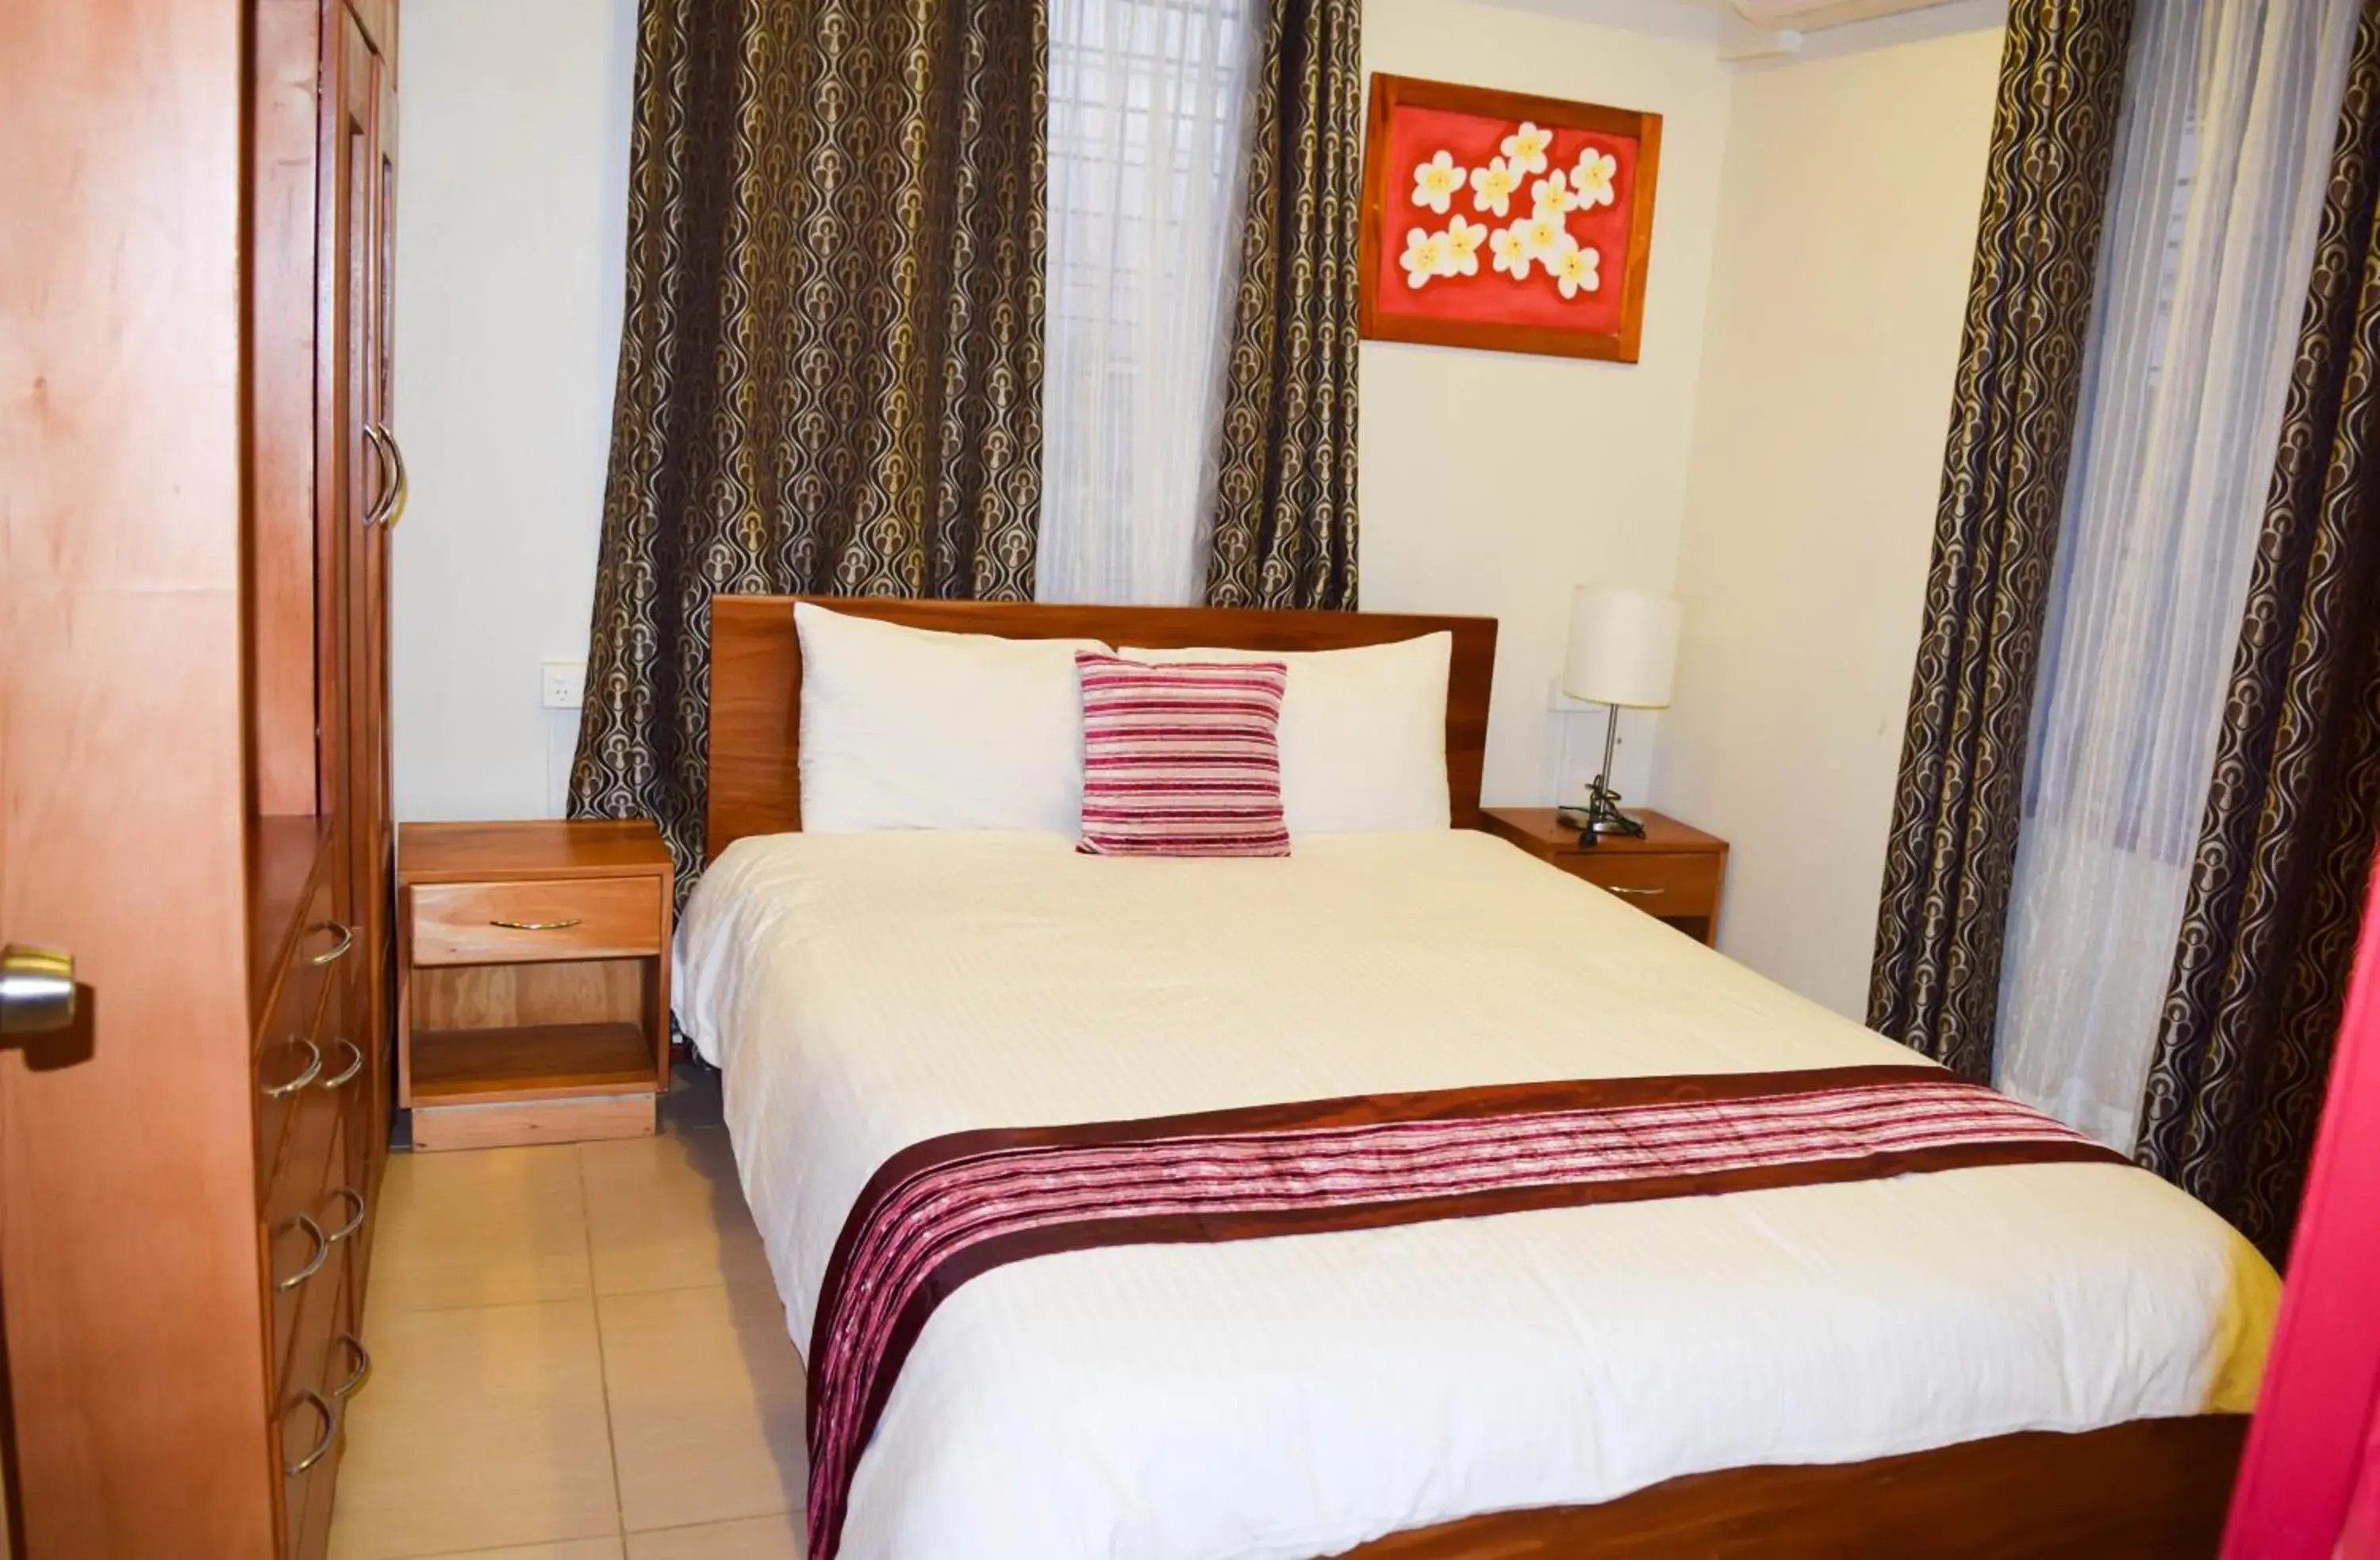 Bed, Room Photo in Al - Minhaj Service Apartments